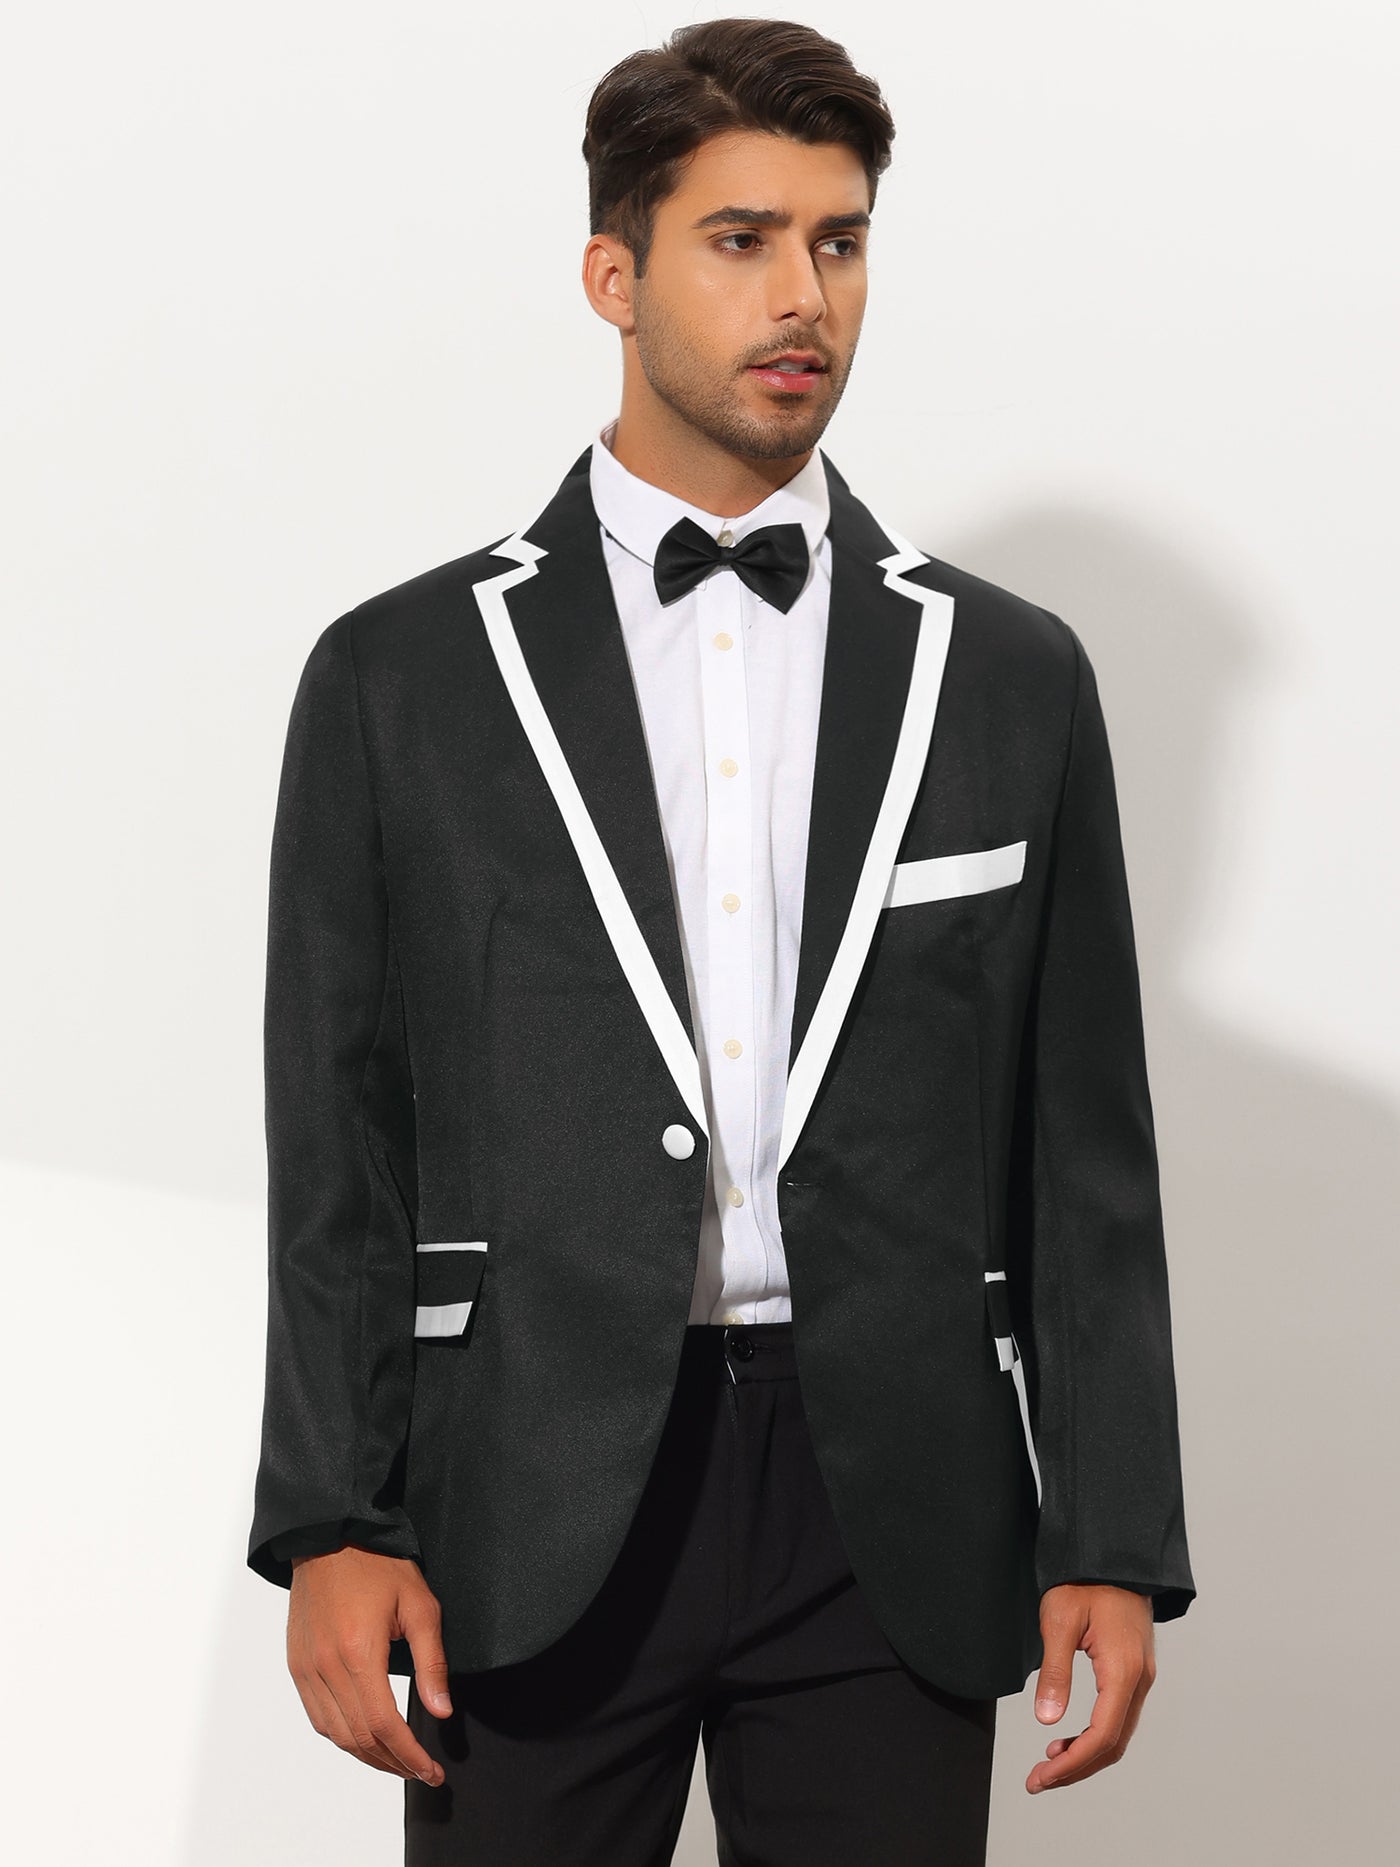 Bublédon Men's Formal Blazer Wedding Dinner Party Prom Tuxedos Suit Jacket